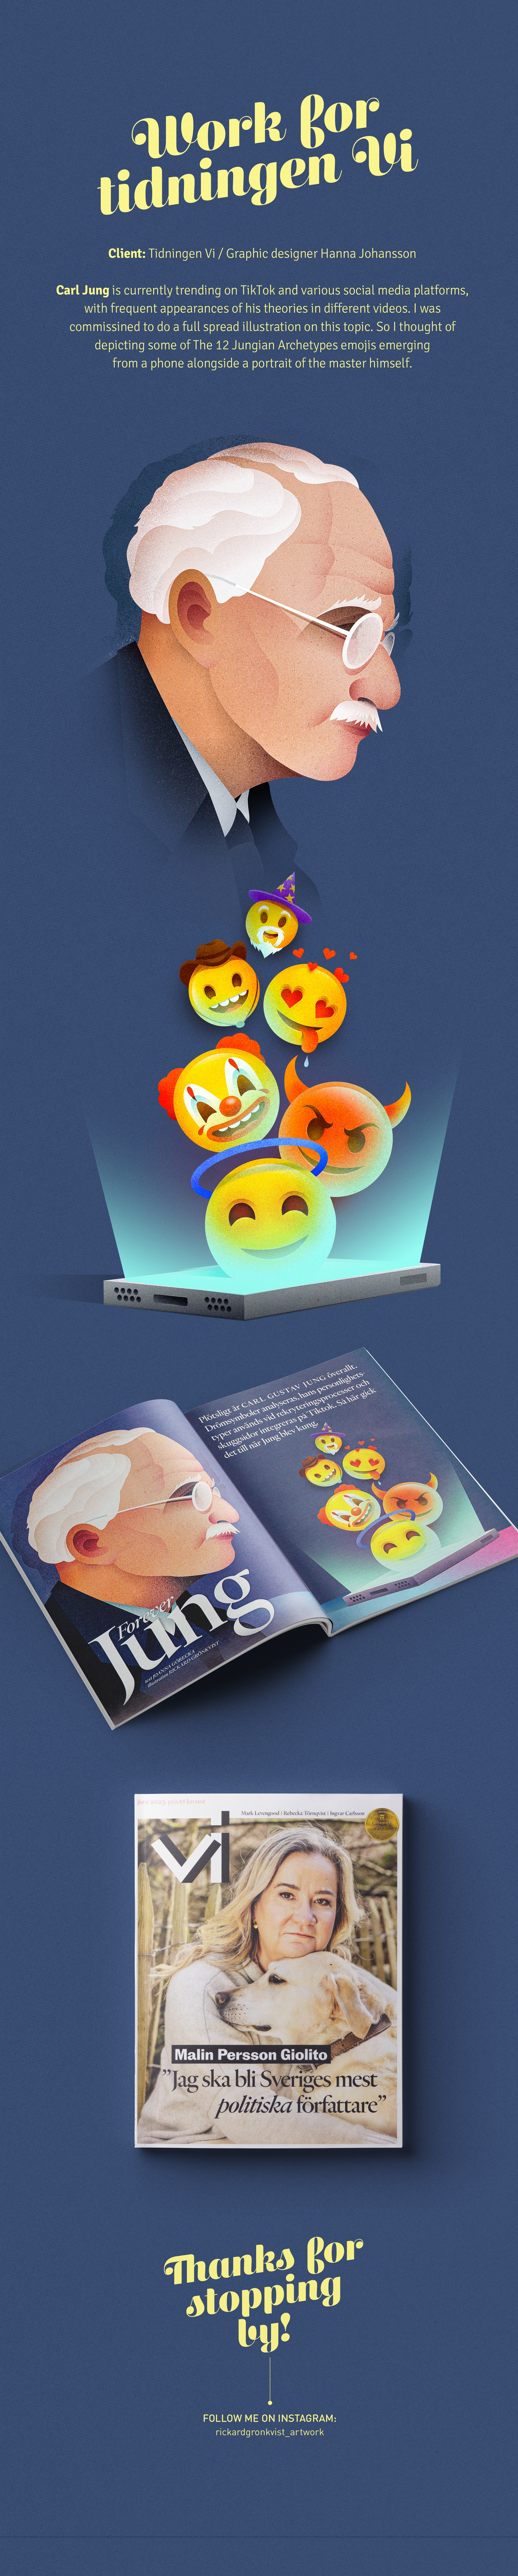 carl jung archetypes carl jung freud Emoji TikTok iphone mobile EDITROIAL print